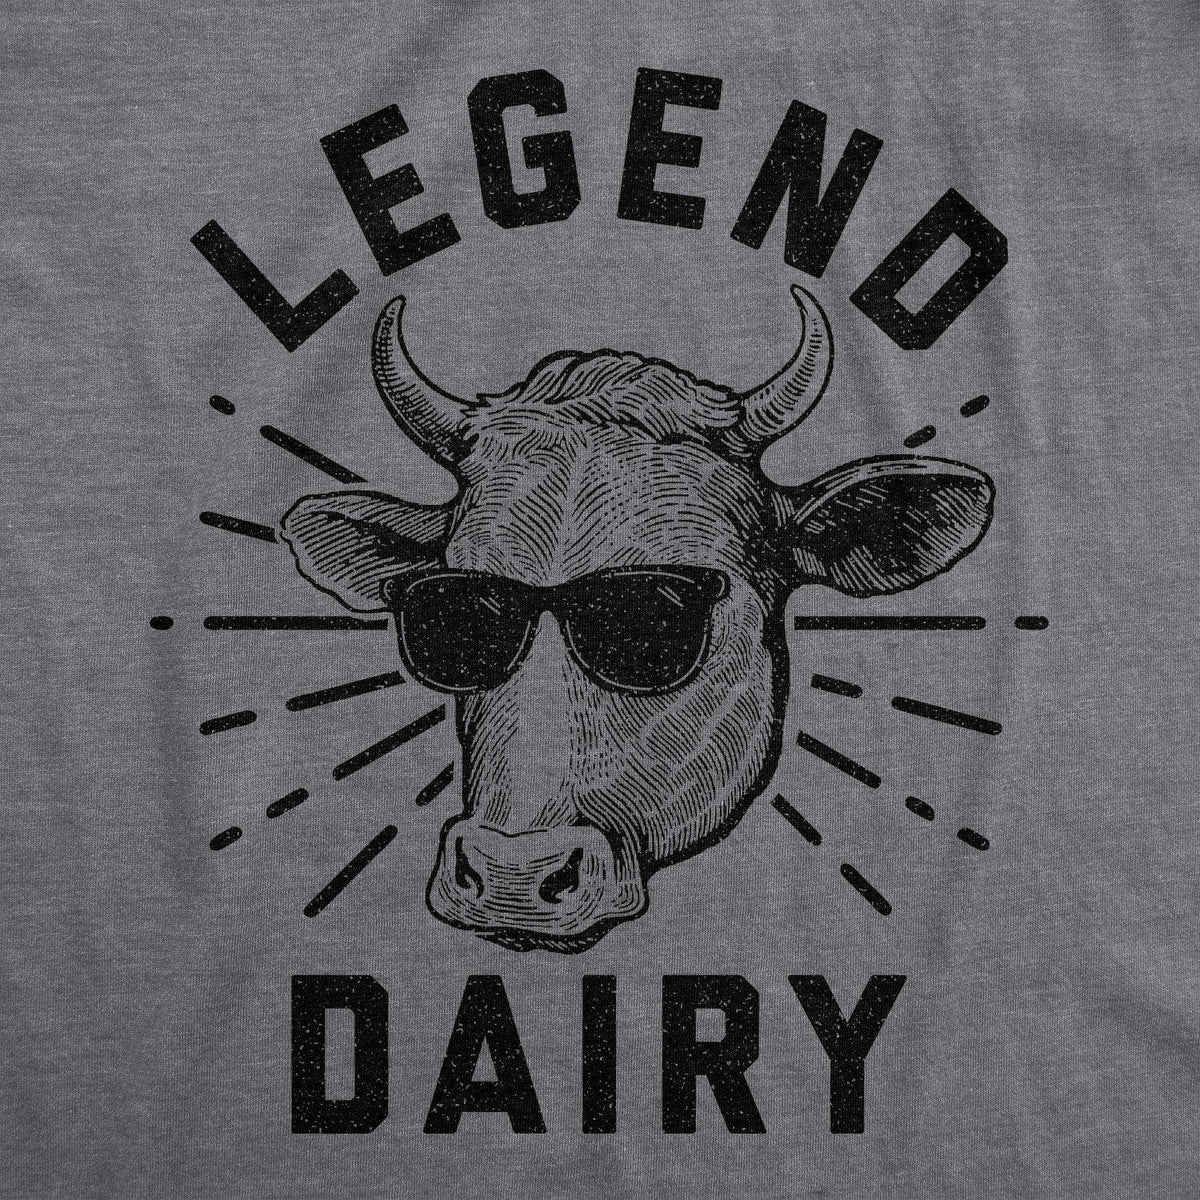 Legend Dairy Men&#39;s Tshirt - Crazy Dog T-Shirts